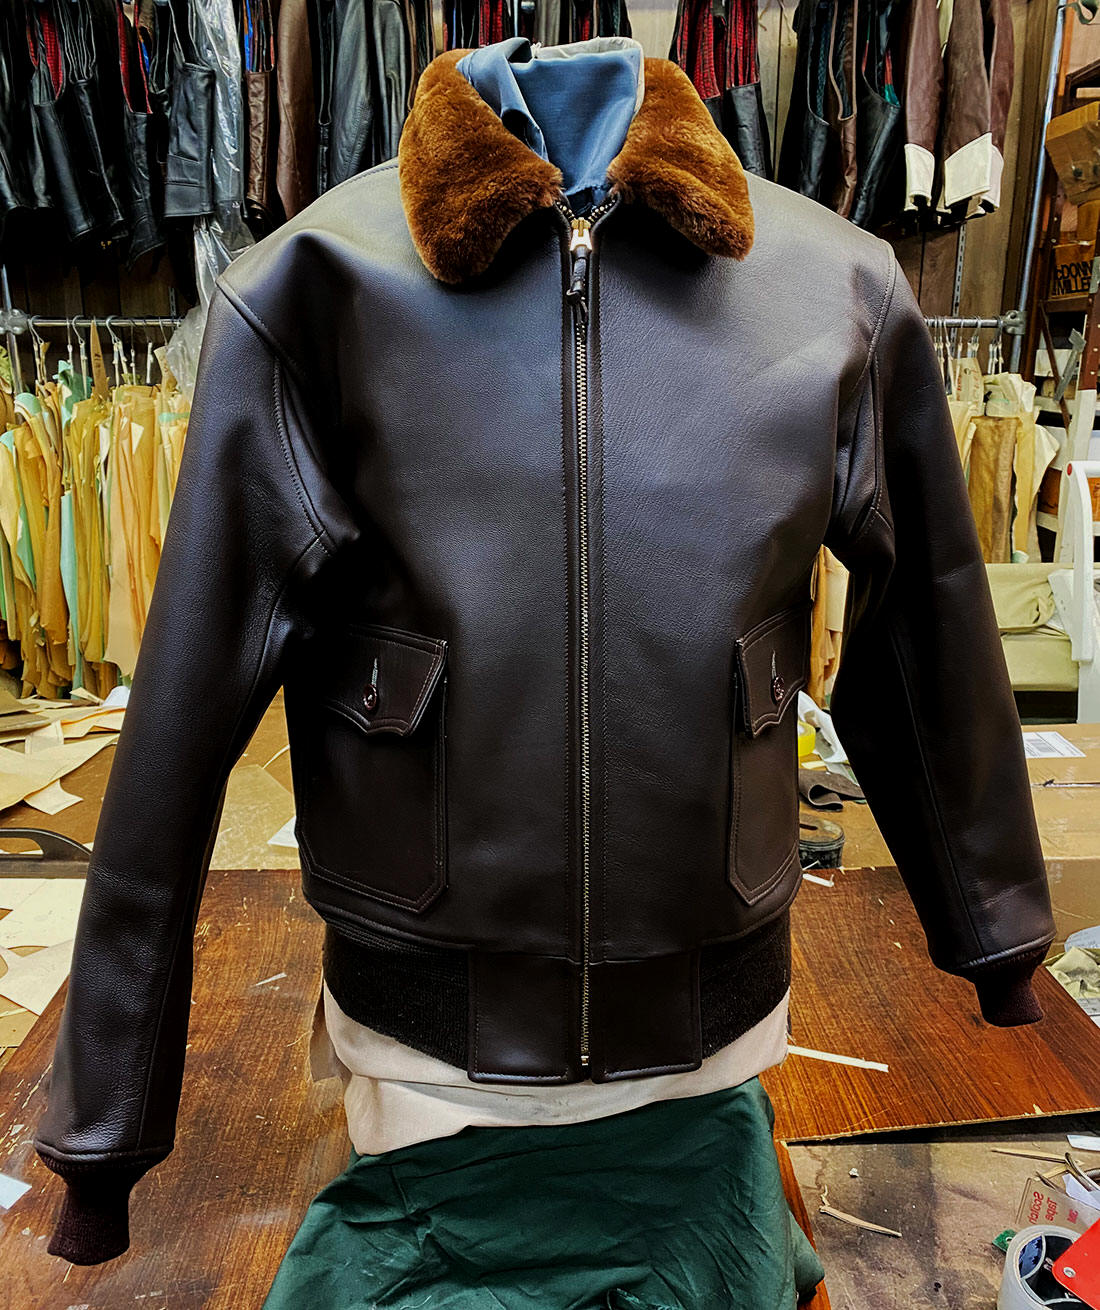 J.A. Dubow Mfg. Co. G-1 Goatskin Leather Flight Jacket